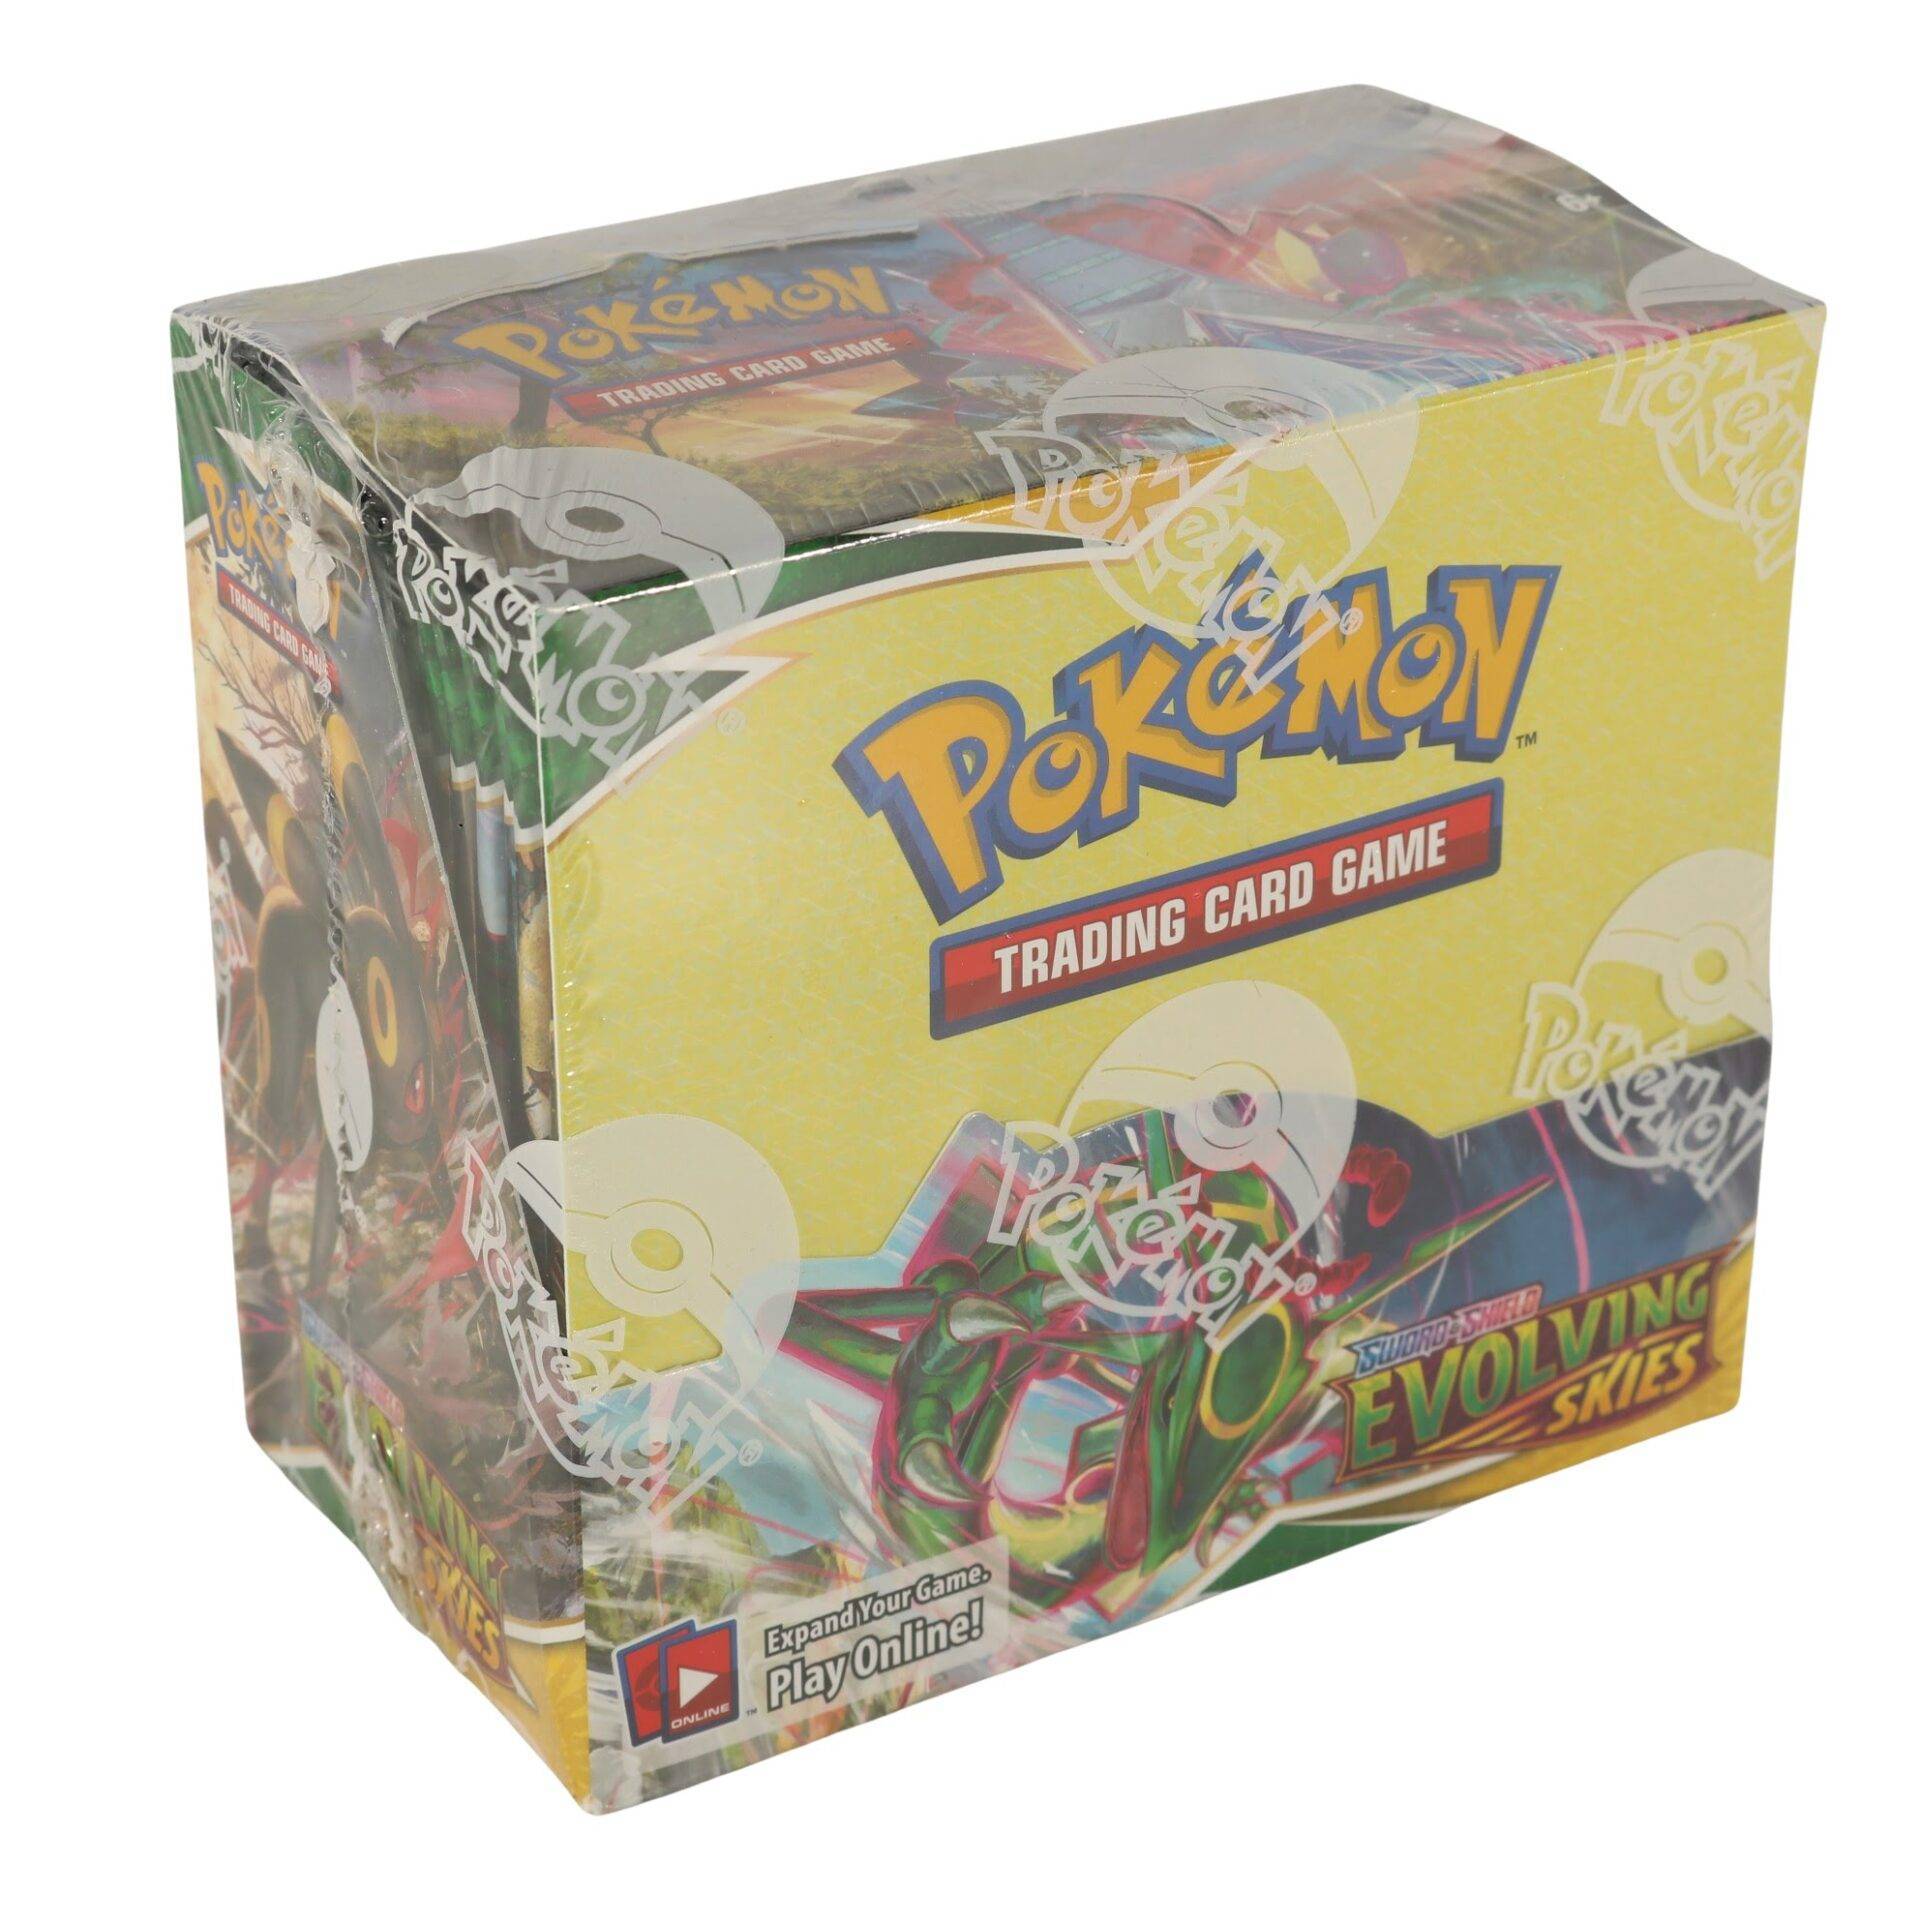 Pokémon TCG: Evolving Skies Booster Box – PSAPIKACHU